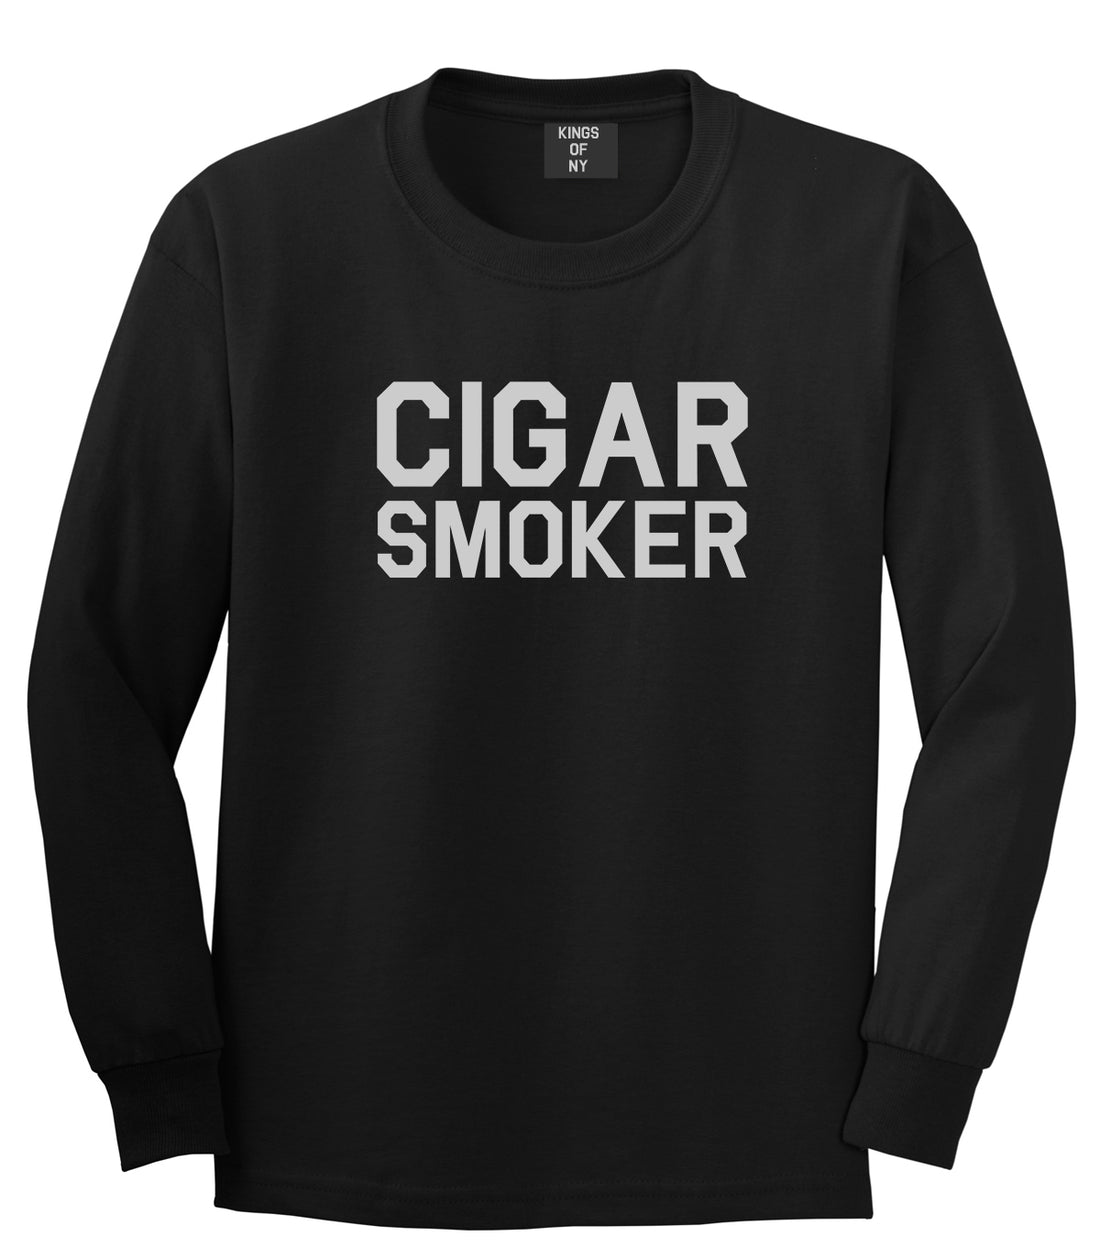 Cigar Smoker Black Long Sleeve T-Shirt by Kings Of NY